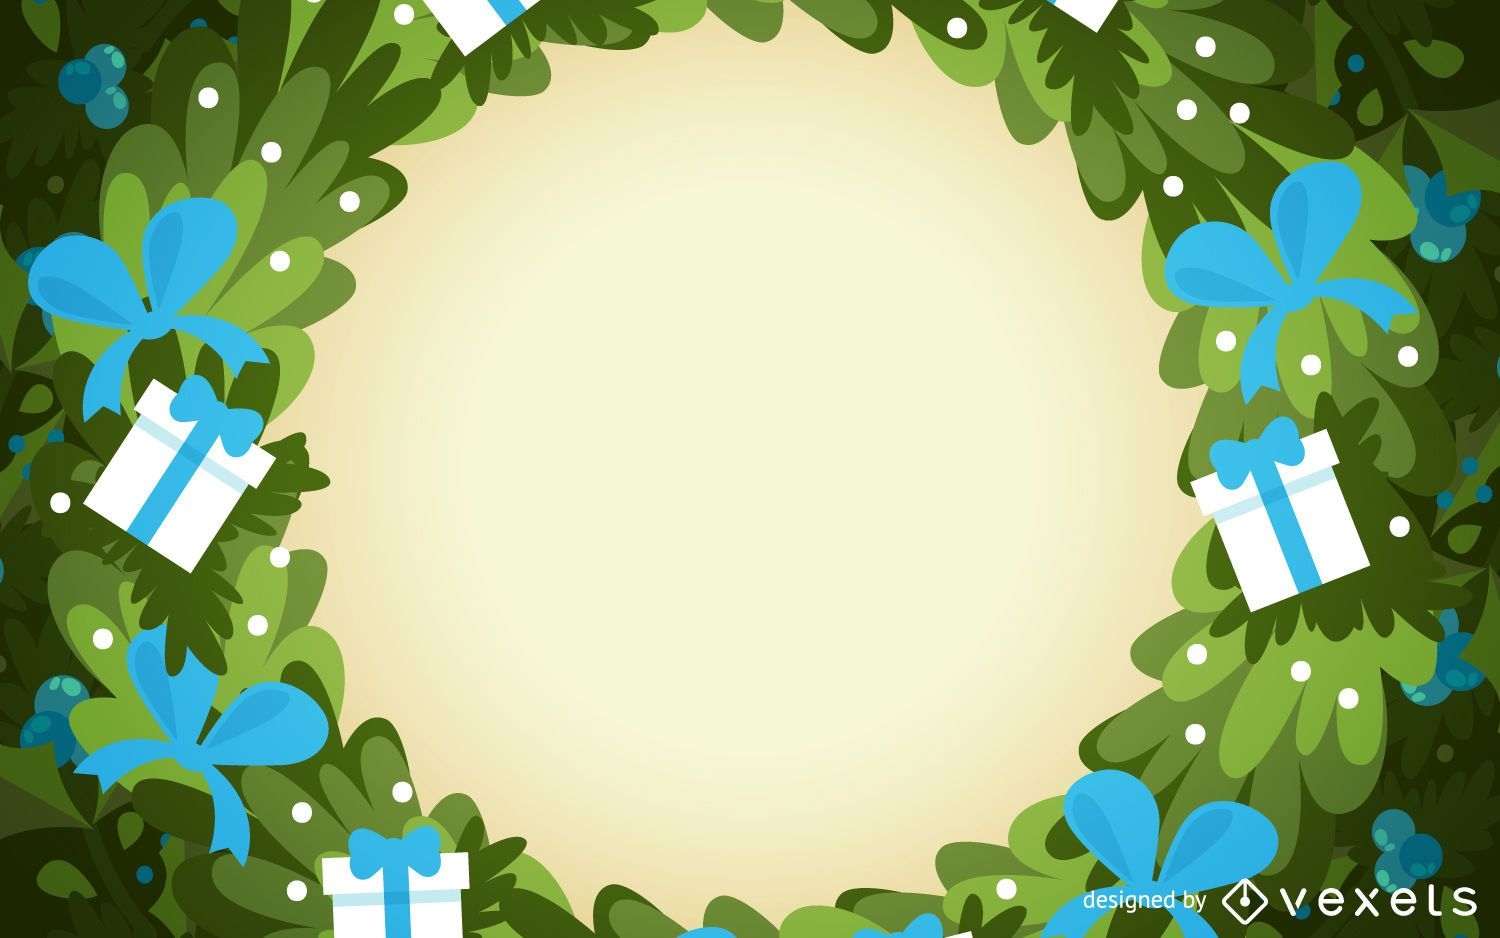 Christmas wreath frame background